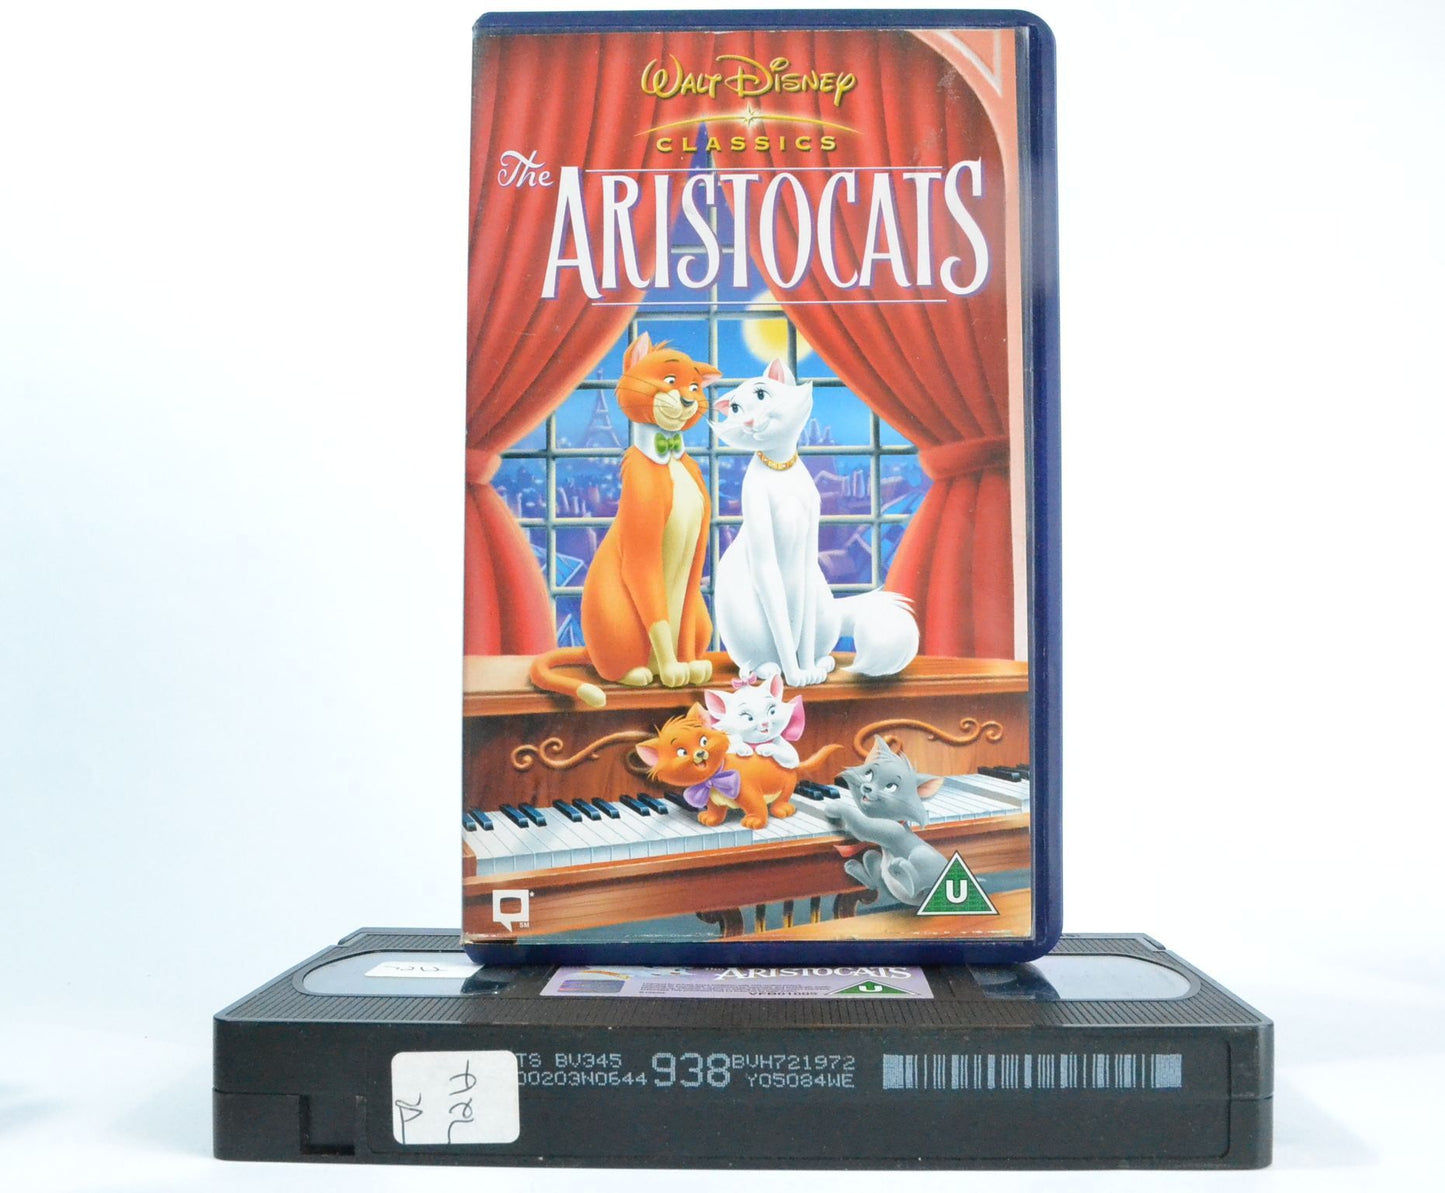 The Aristocats: Disney Classics - Children’s Animation (1970) Paris France - VHS-